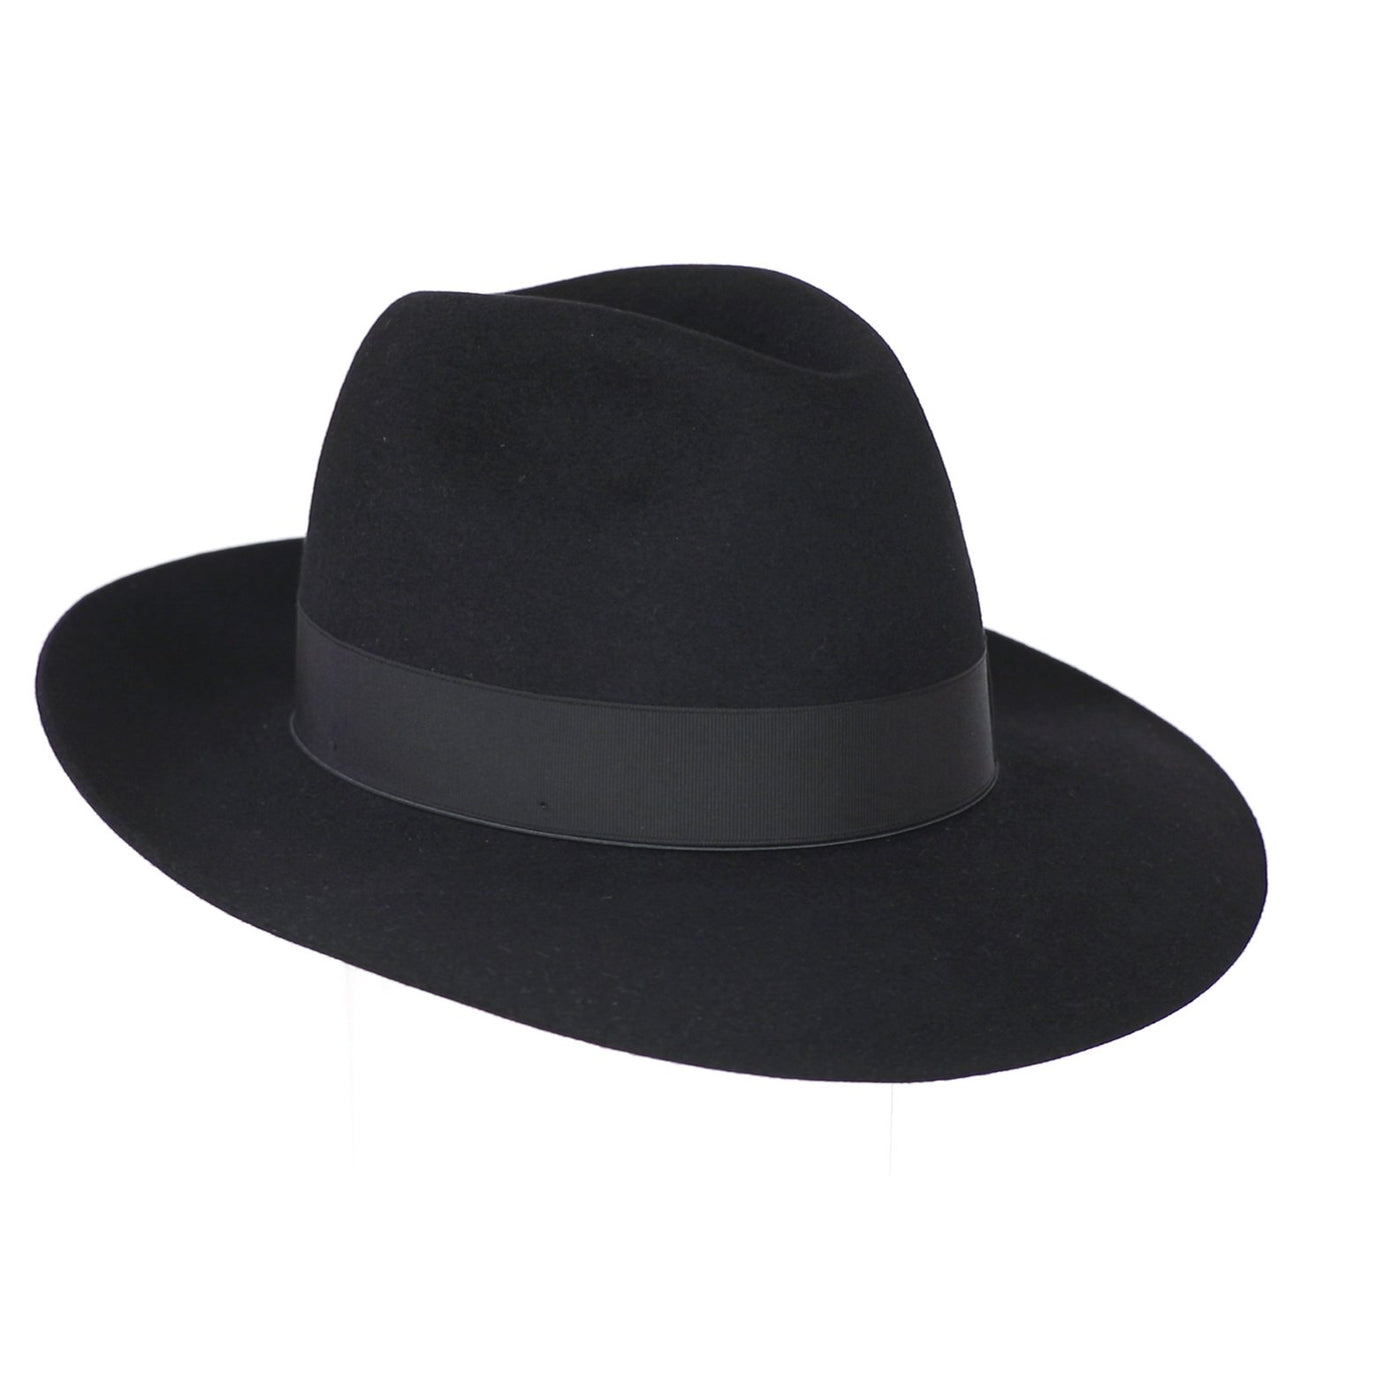 Andelli 234 - Black, product_type] - Borsalino for Atica fedora hat